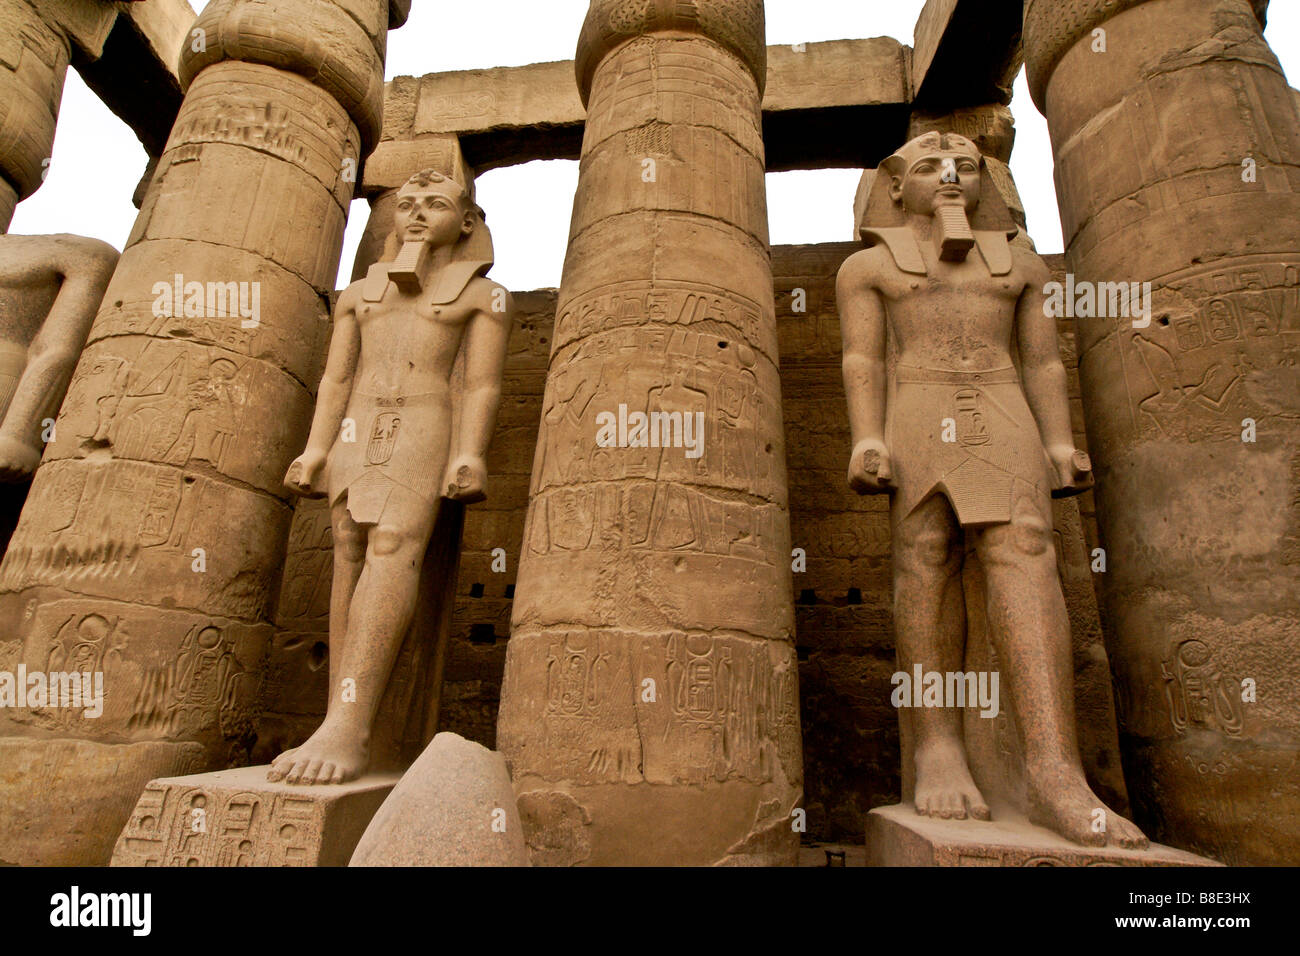 Pharaoh statues at Luxor Temple, Luxor, Egypt Stock Photo